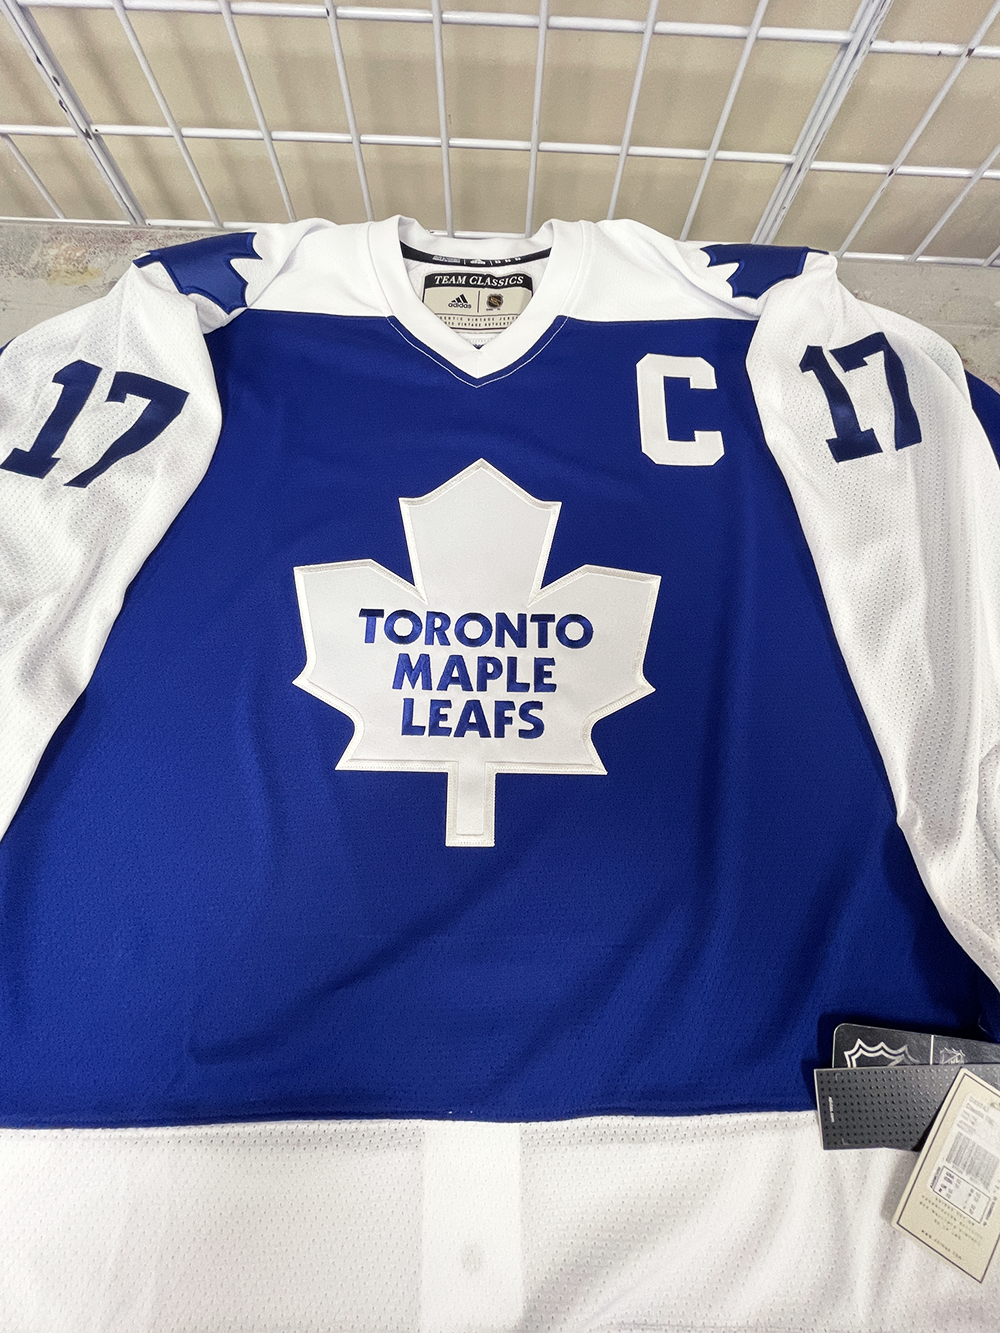 Adidas Men's Toronto Maple Leafs Jersey Size Small NHL Stitched